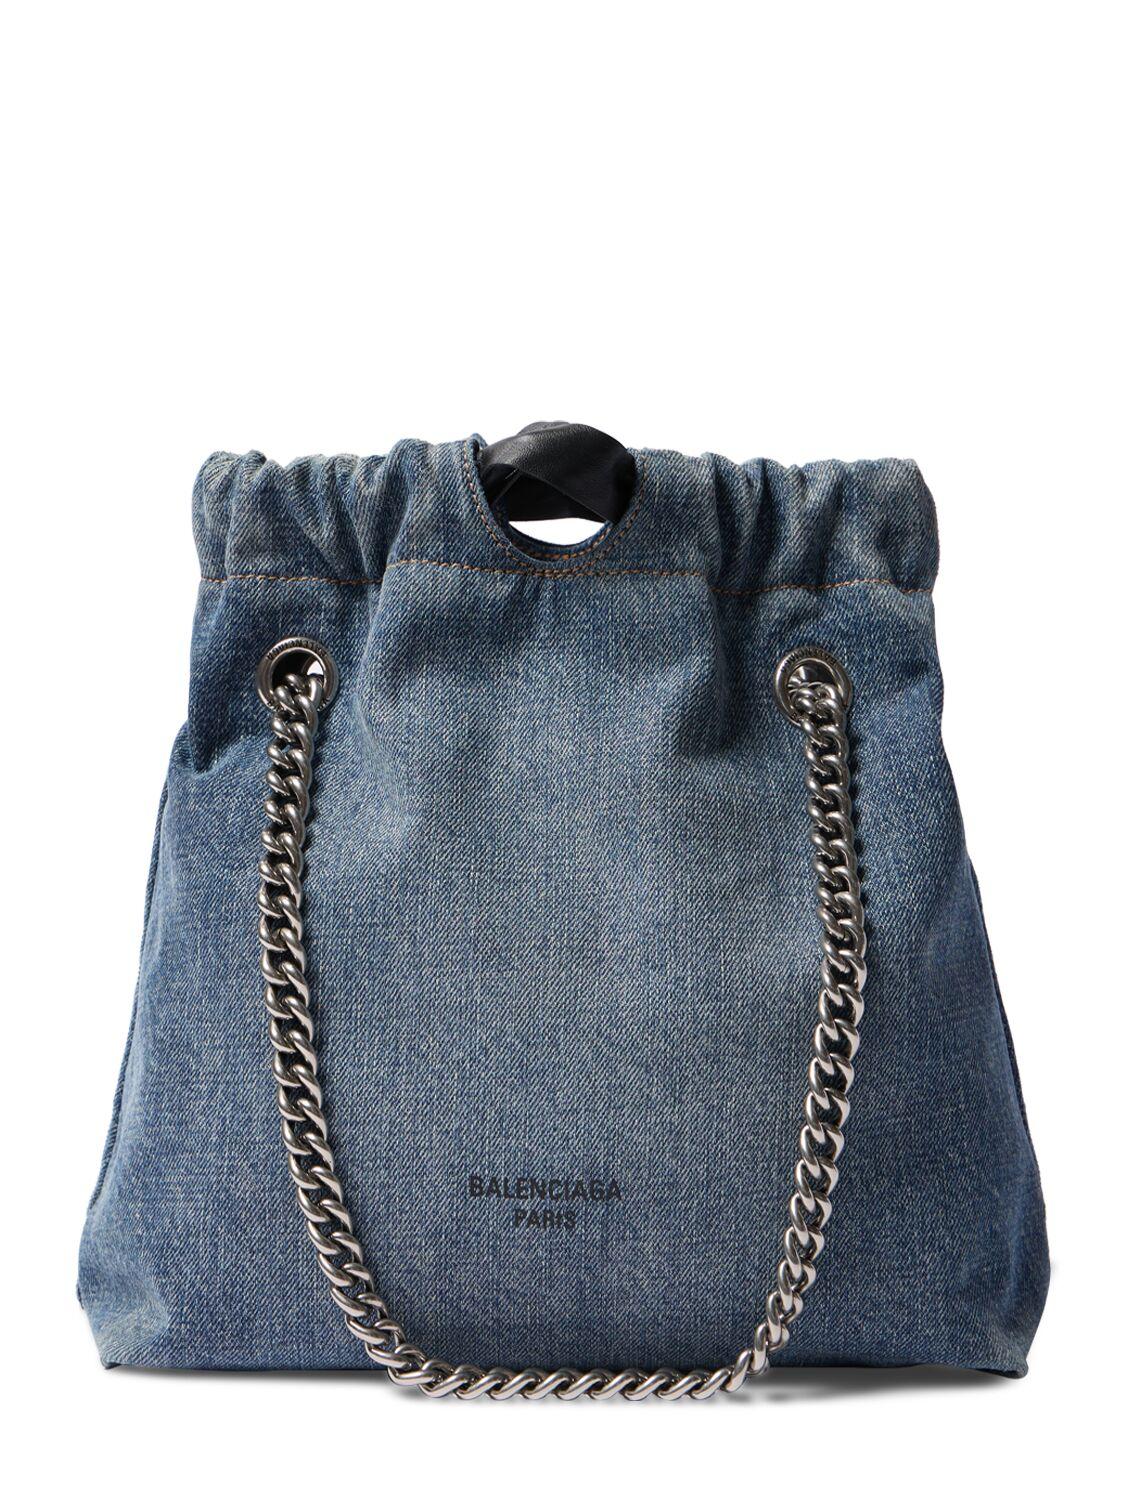 Balenciaga Bags for Women - Shop on FARFETCH